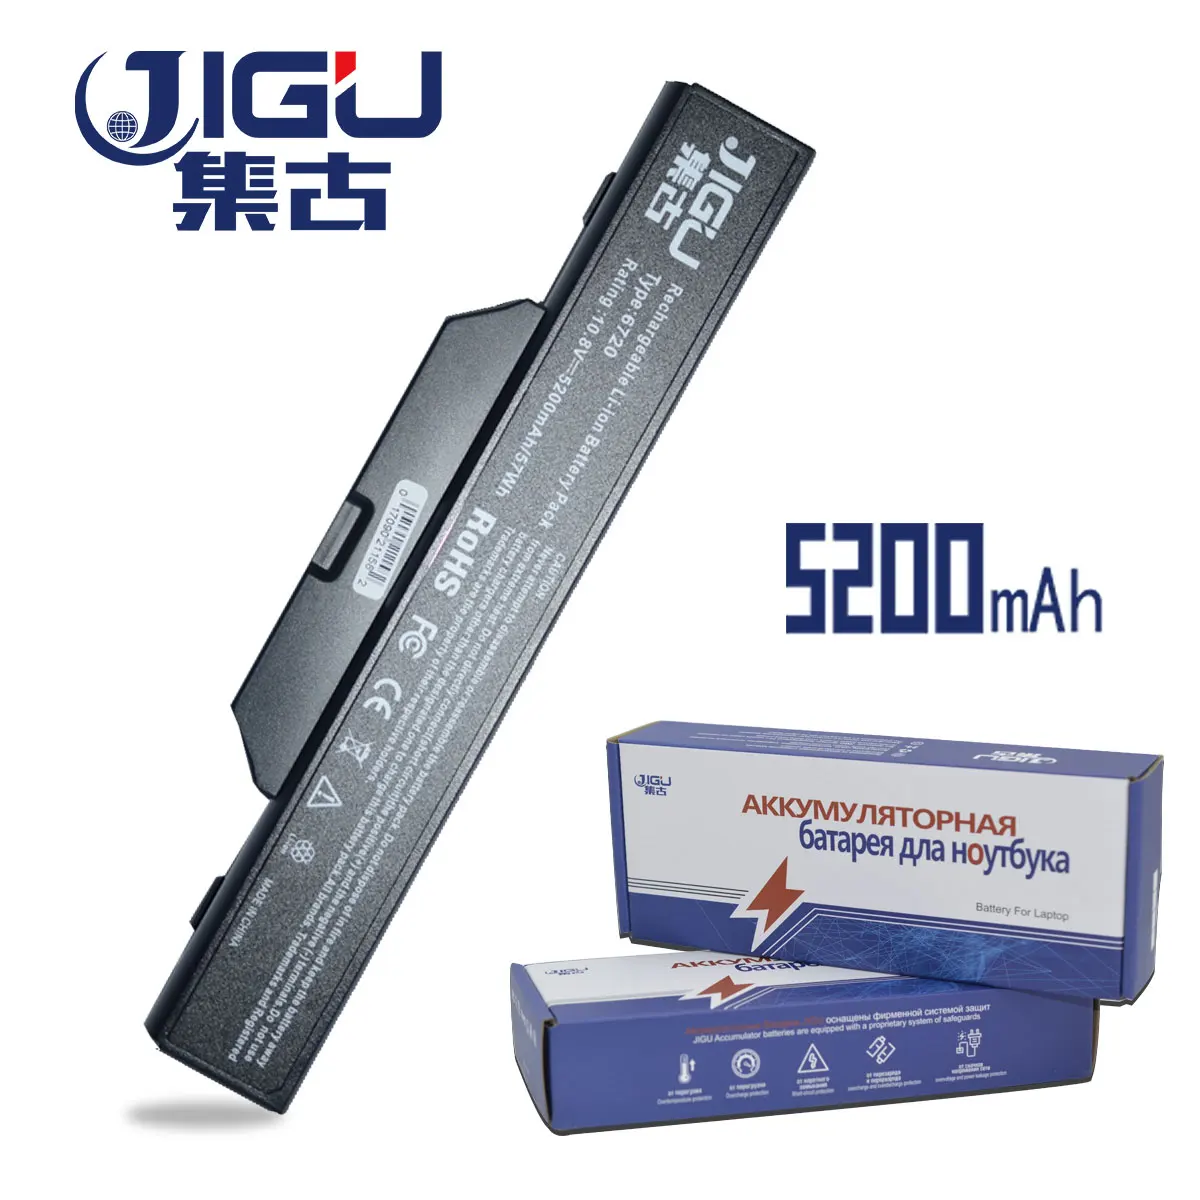 JIGU устройство замено ноутбука Батарея для hp COMPAQ 510 610 615 6720 6735 CT 6730s 6820 6830 S 451086-161 451568-001 аккумулятор большой емкости